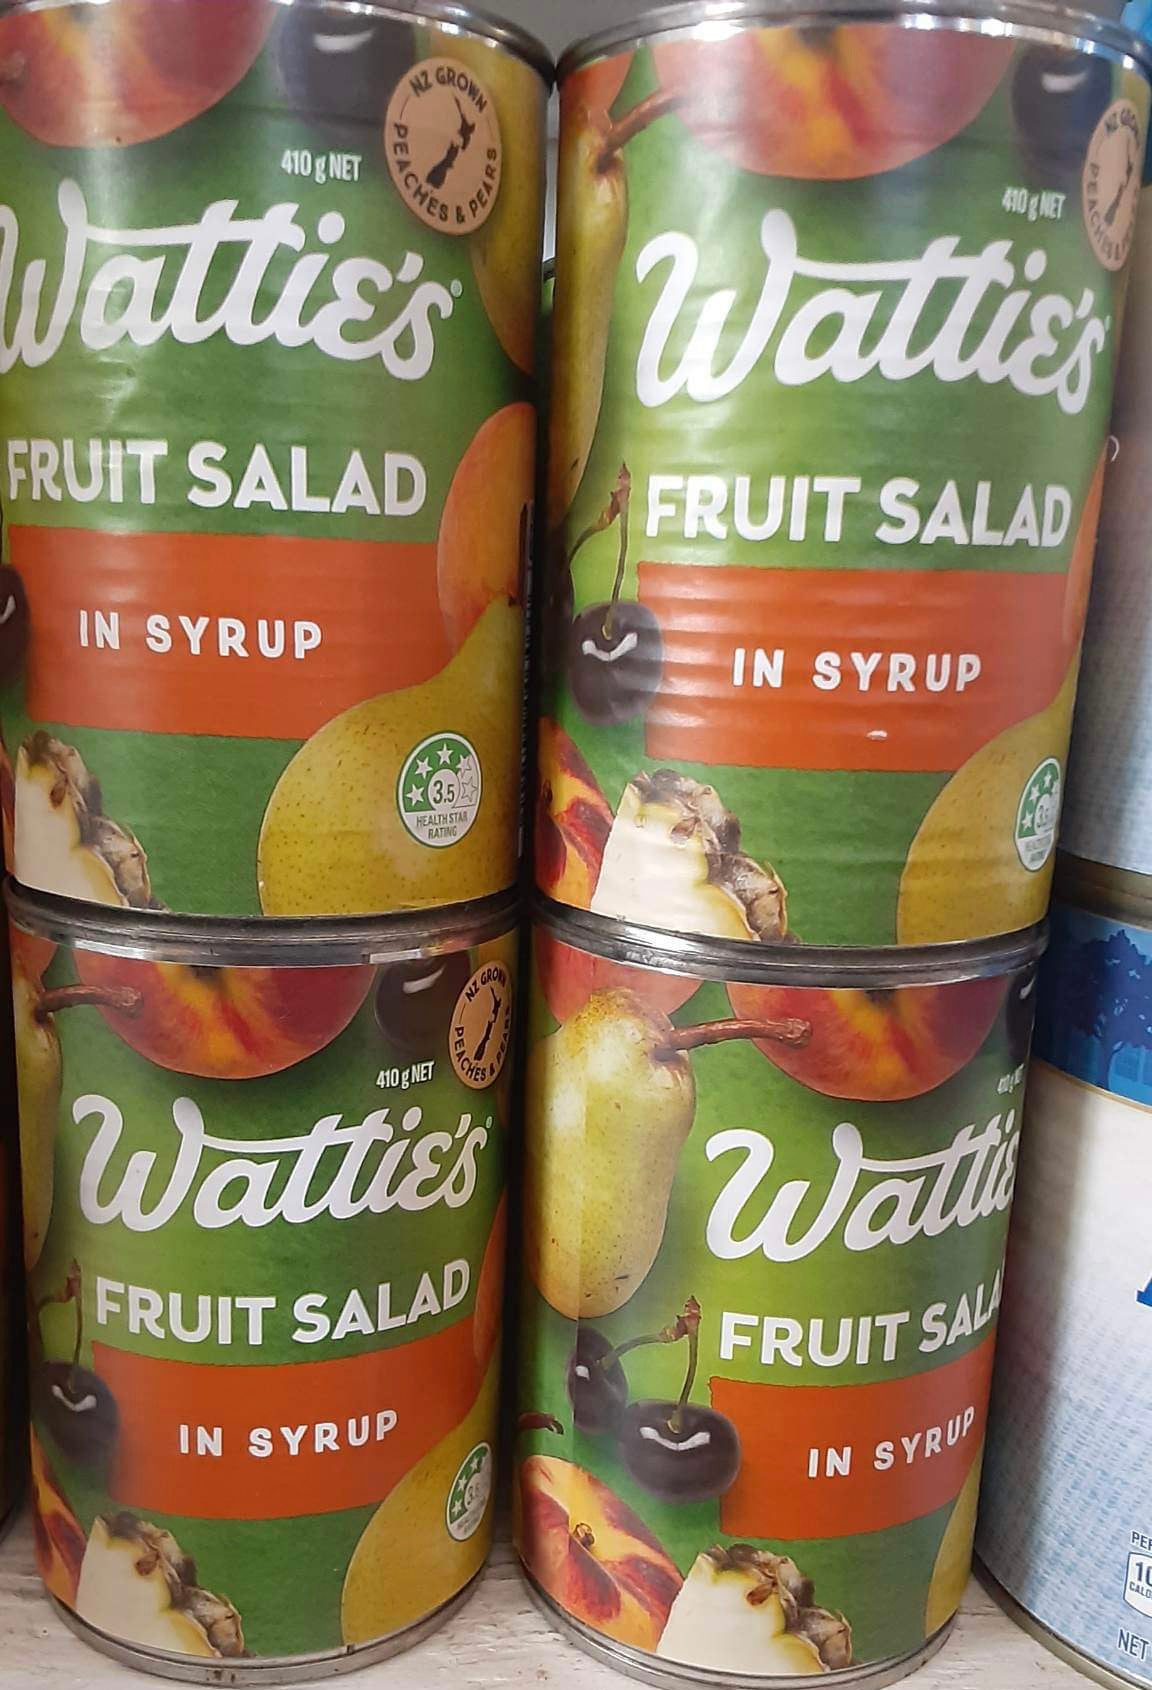 Wattie’s Fruit Salad in syrup